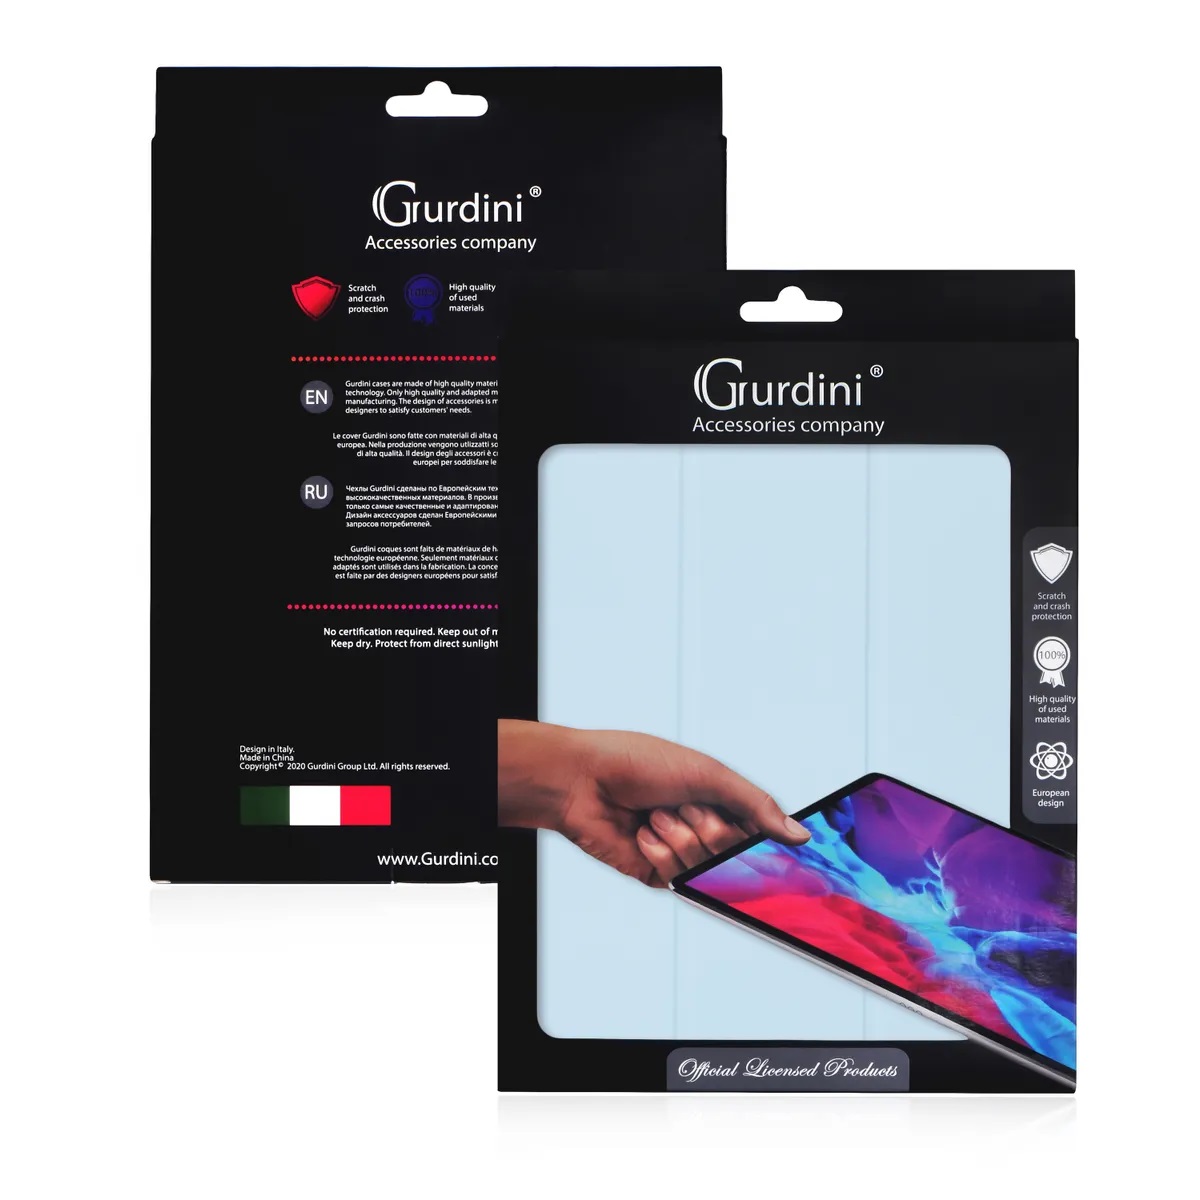 Чехол-книжка Gurdini Milano Series (pen slot) для iPad Air 10.9 Cloud Blue